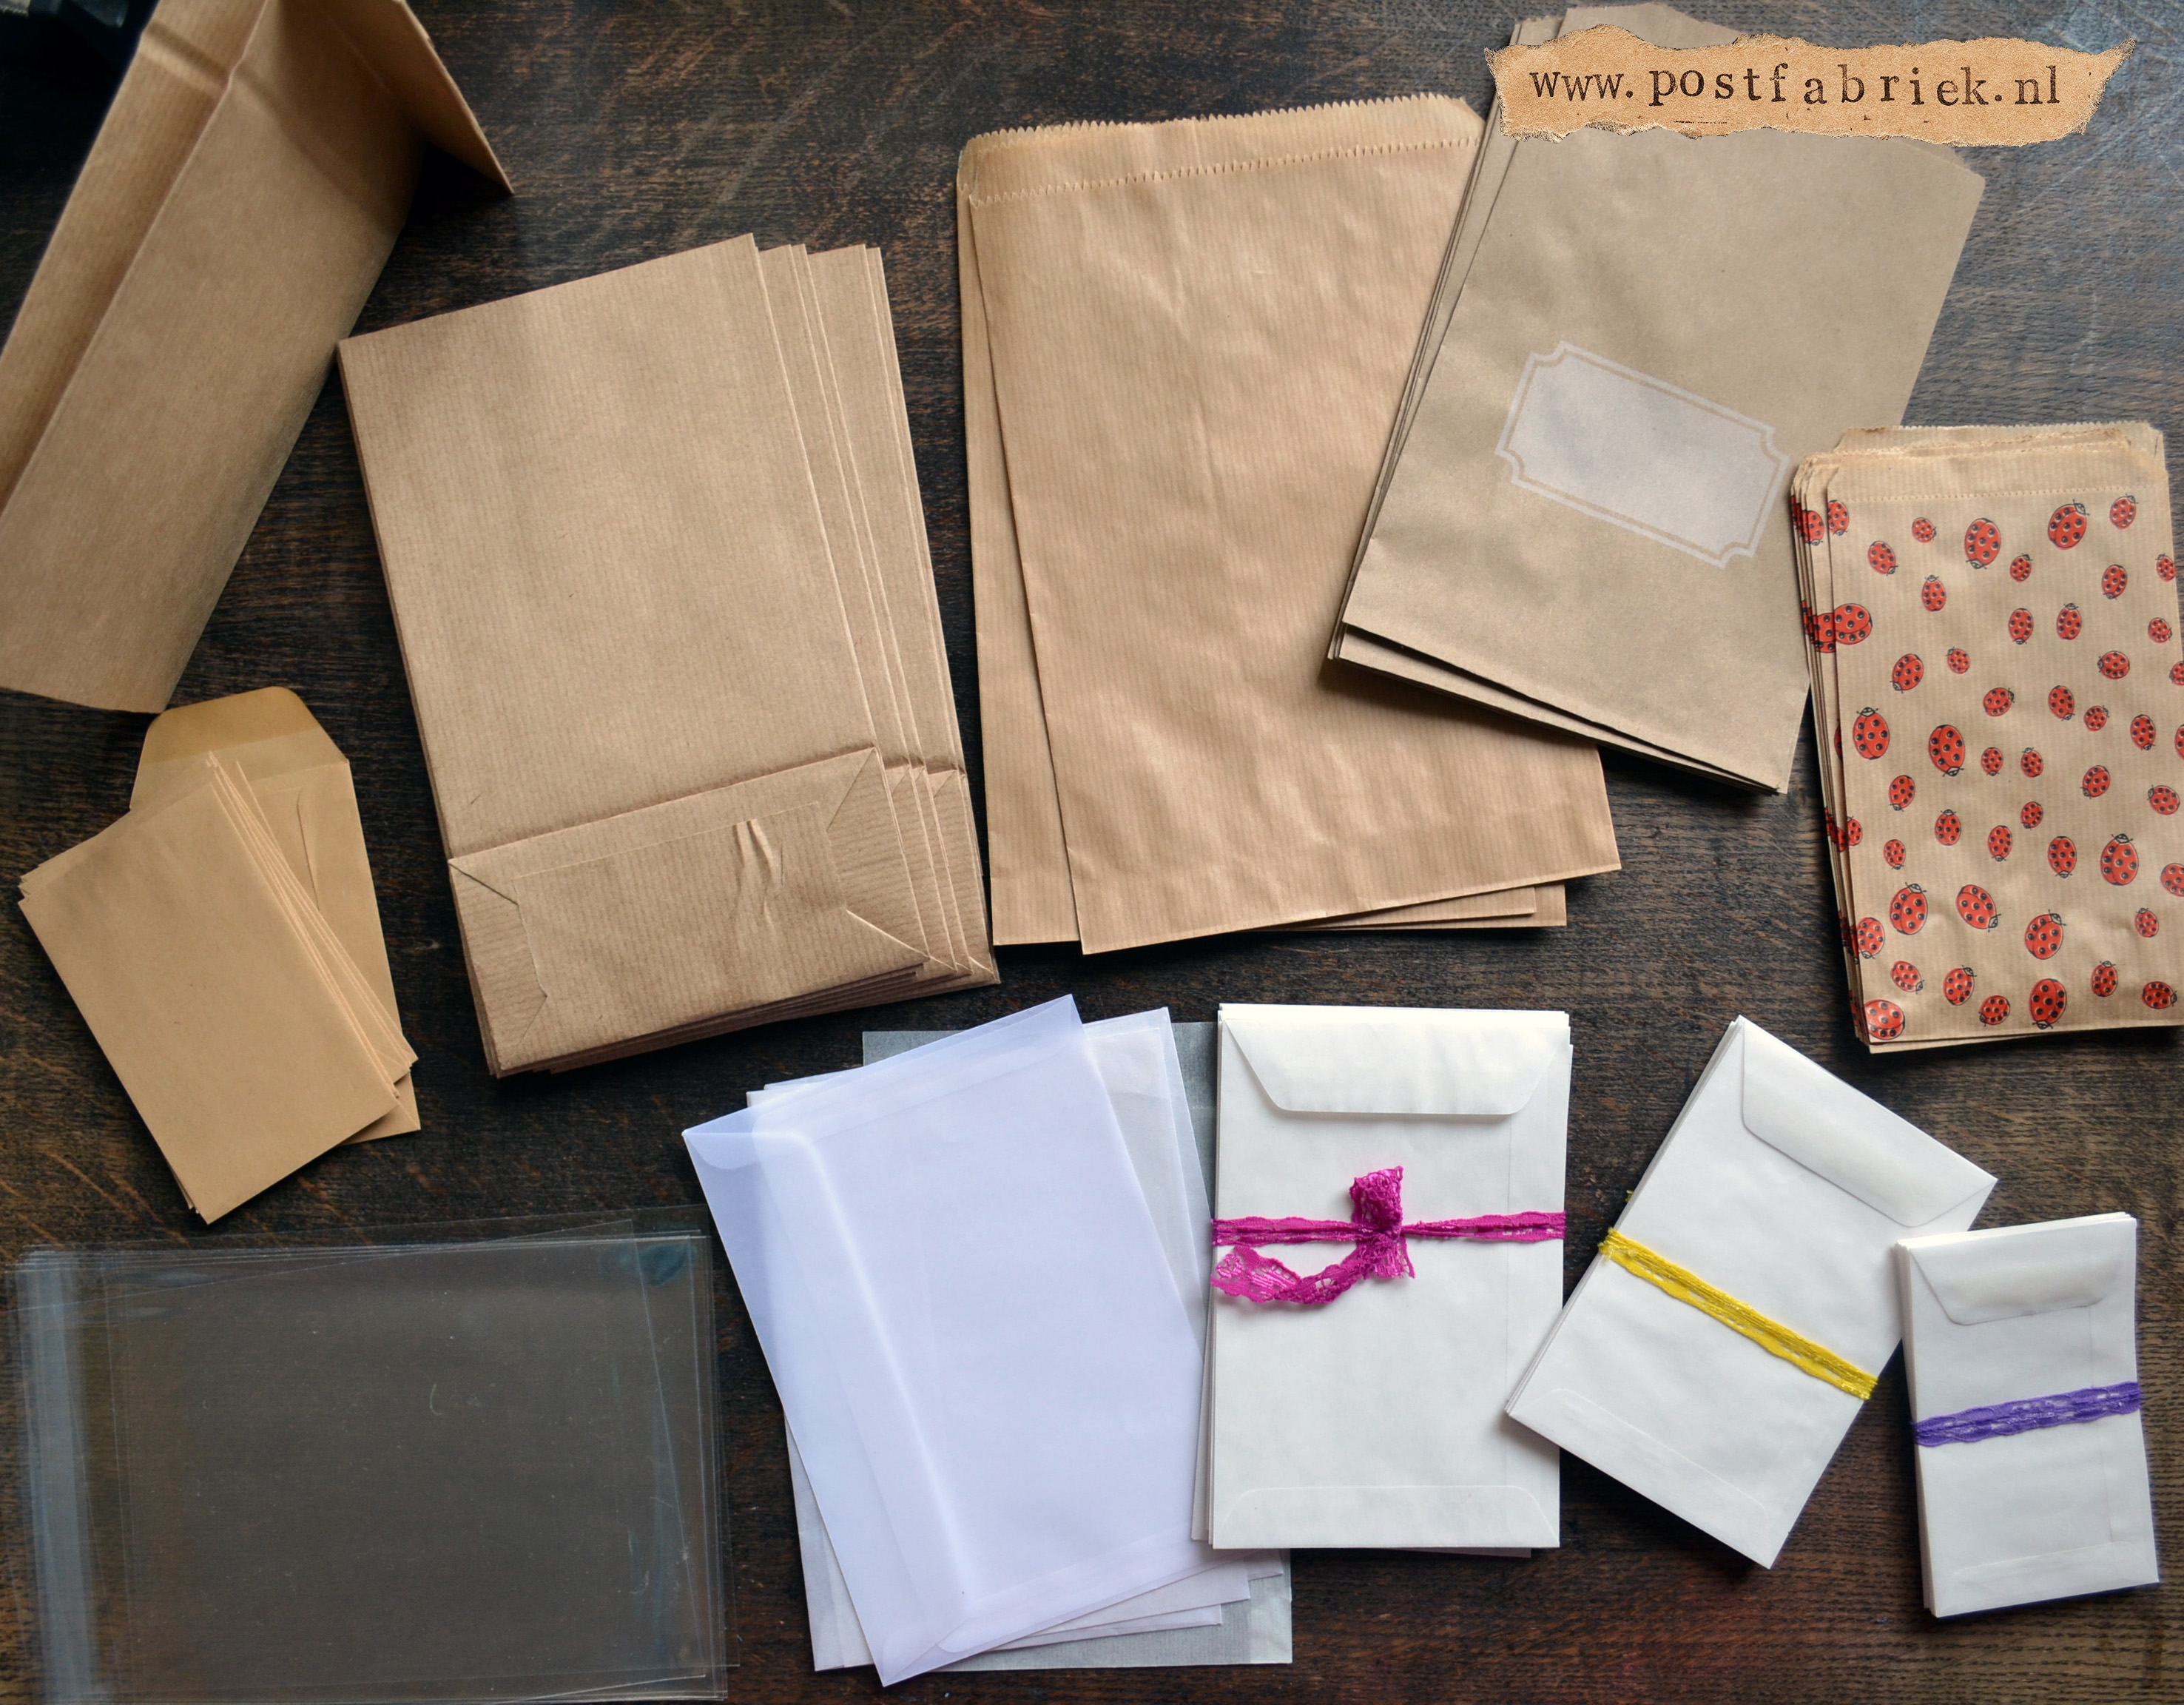 matras apotheek Verplicht Dol op papieren zakjes! - Postfabriek